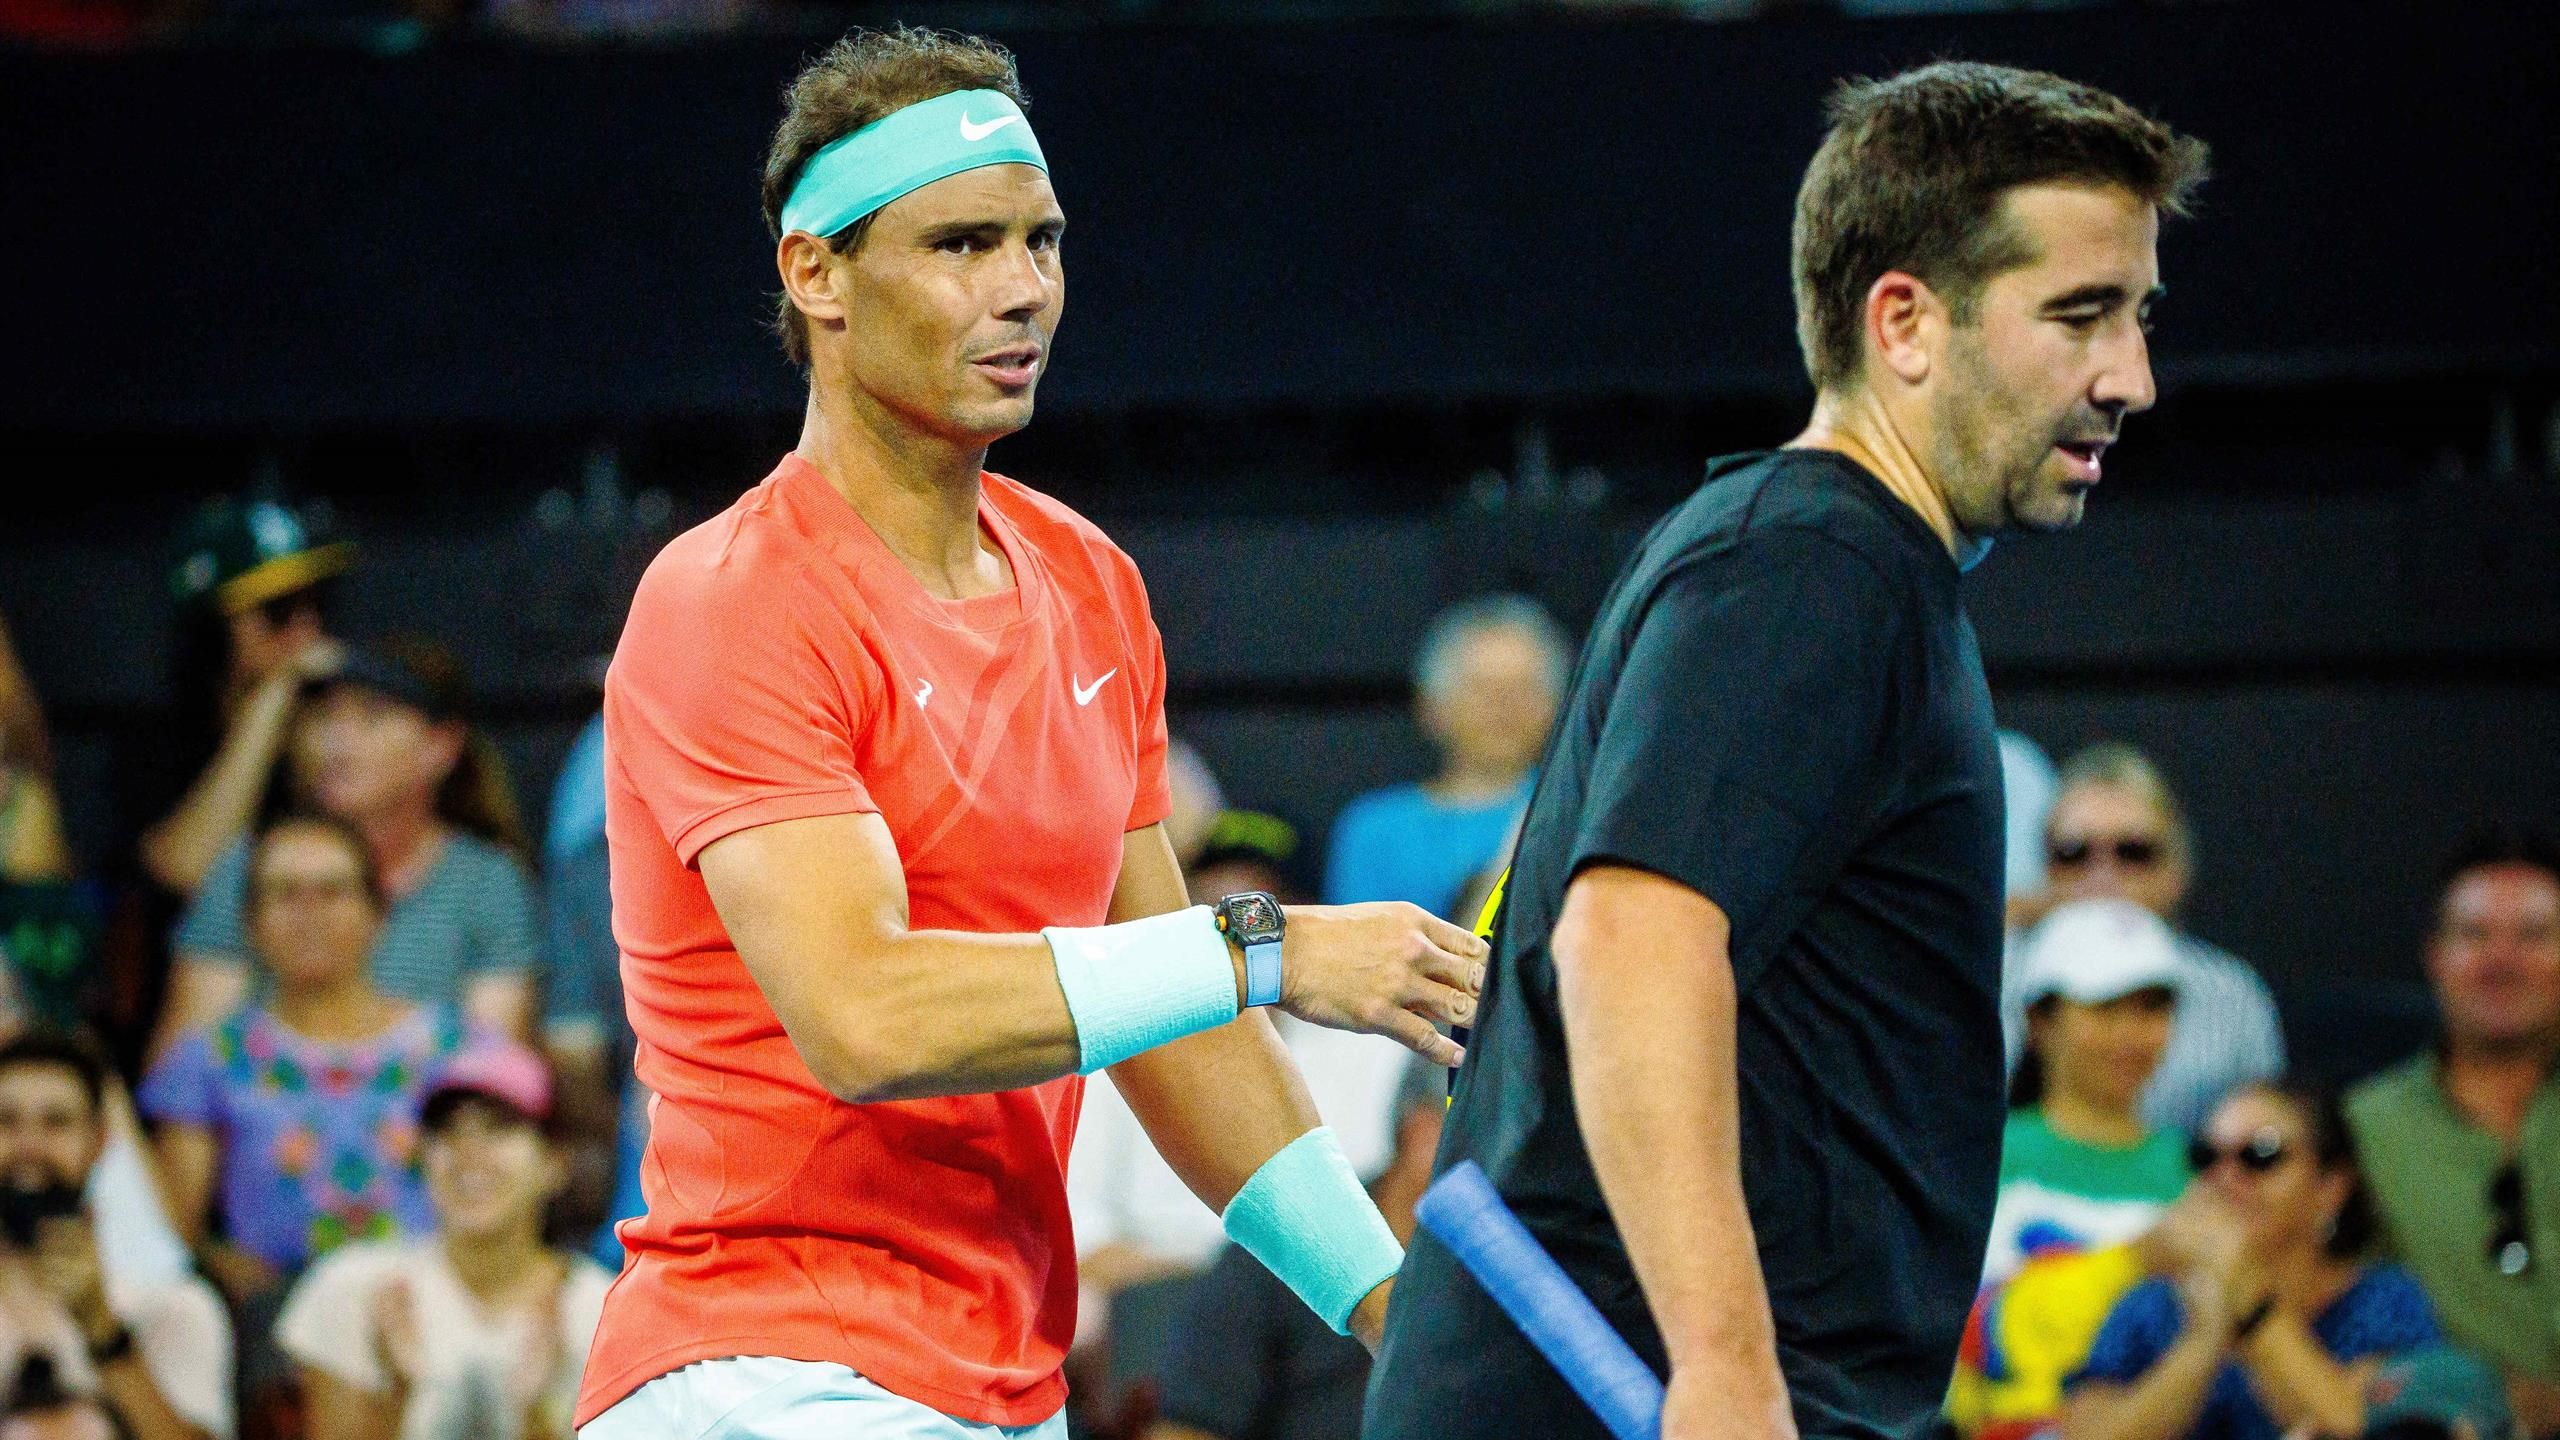 Rafael Nadal beaten in first match back since injury in Brisbane doubles,  Andy Murray also beaten - Eurosport